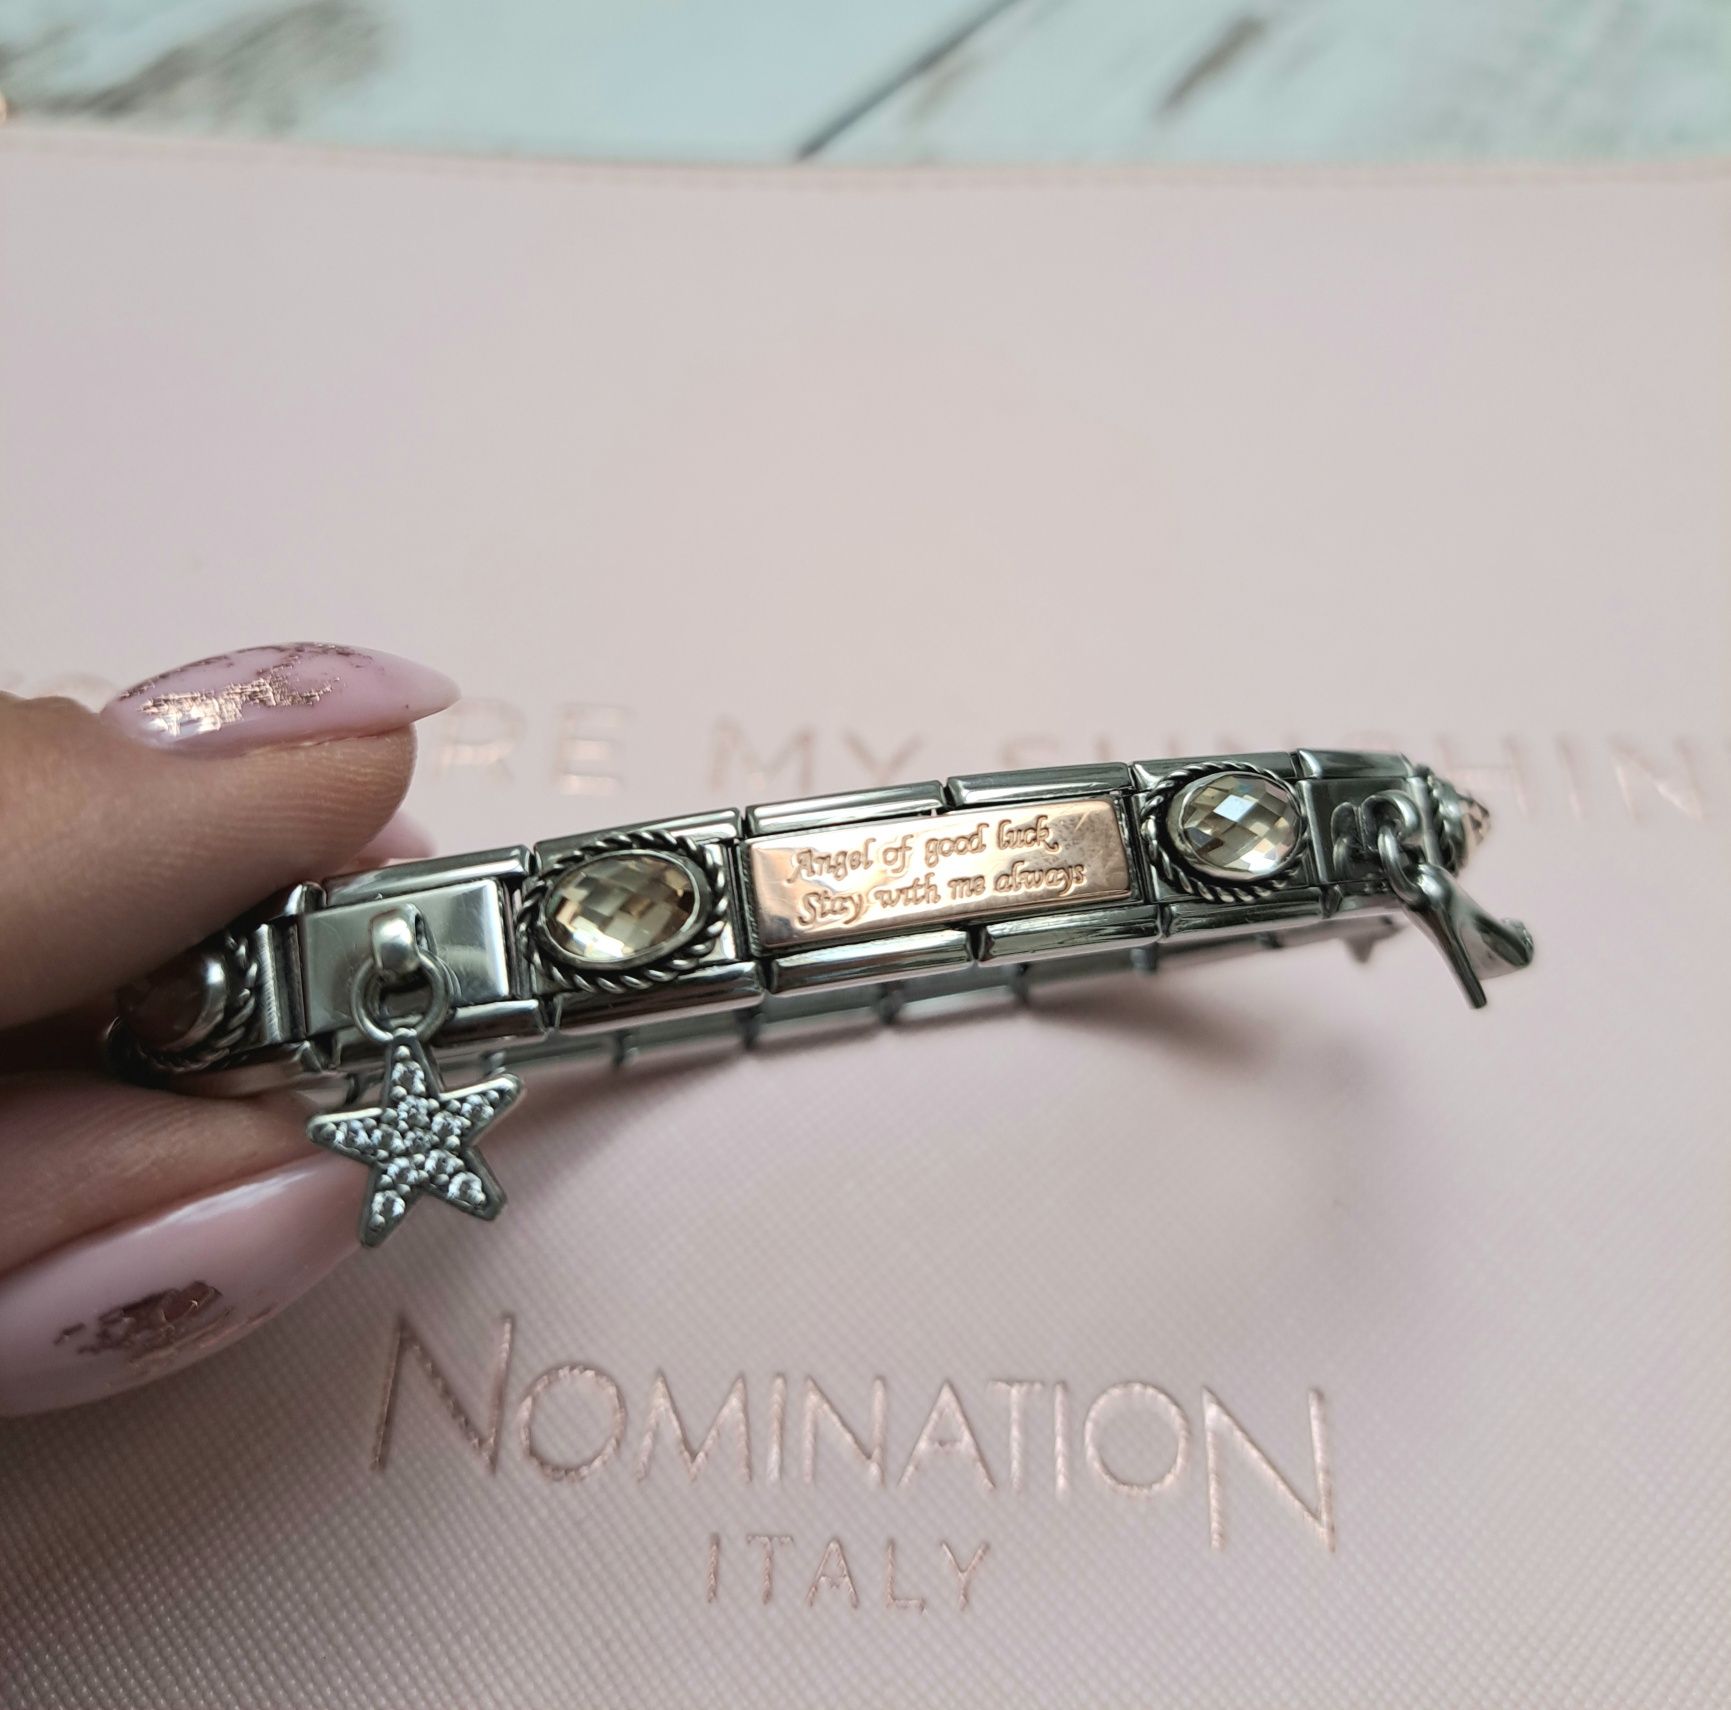 Bransoletka Nomination Italy